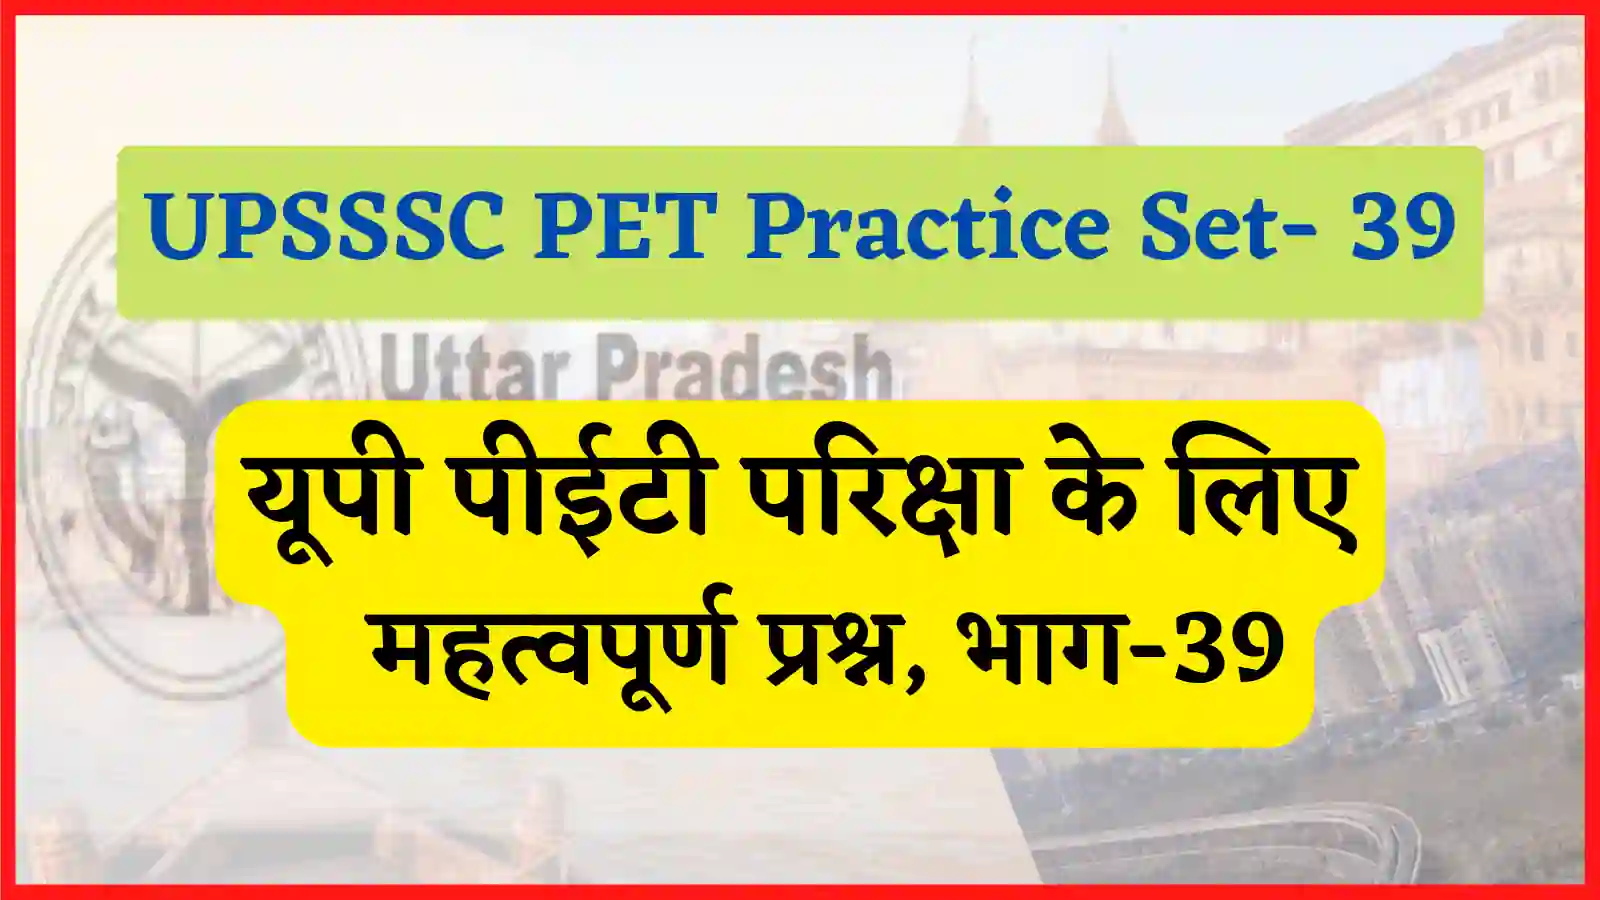 UPSSSC PET Practice Set-39